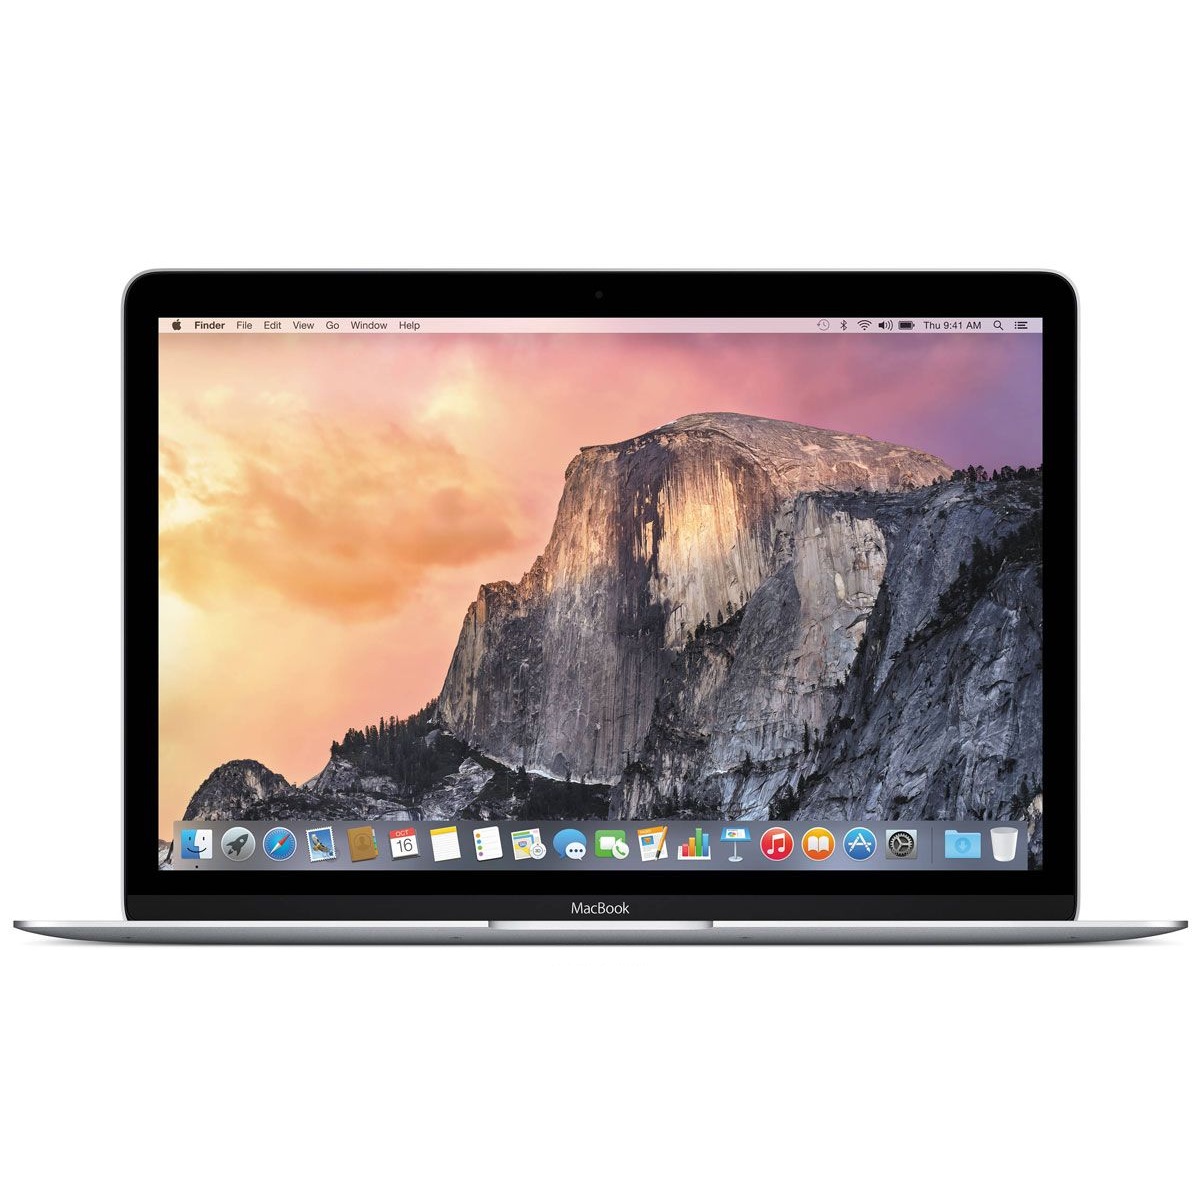 Ноутбук Apple MacBook 12 Retina Early 2015 Silver (MF855RU/A) (Core M 1100 Mhz/12.0/2304x1440/8.0Gb/256Gb SSD/DVD нет/Intel HD Graphics 5300/Wi-Fi/Bluetooth/MacOS X)